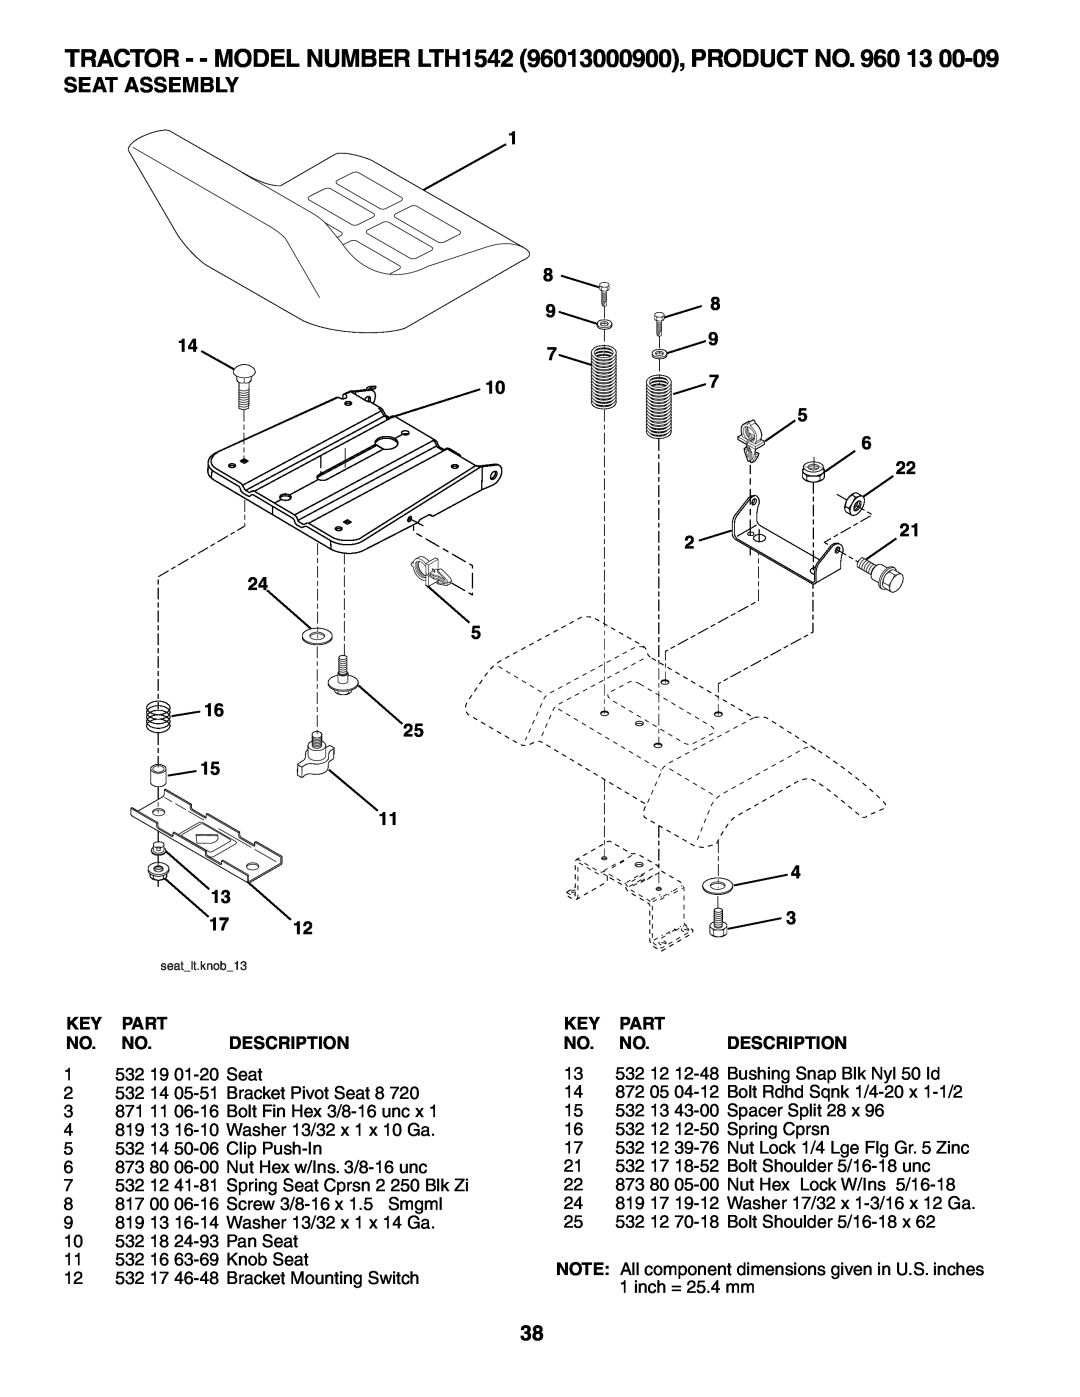 Husqvarna Seat Assembly, TRACTOR - - MODEL NUMBER LTH1542 96013000900, PRODUCT NO. 960, Key Part No. No. Description 